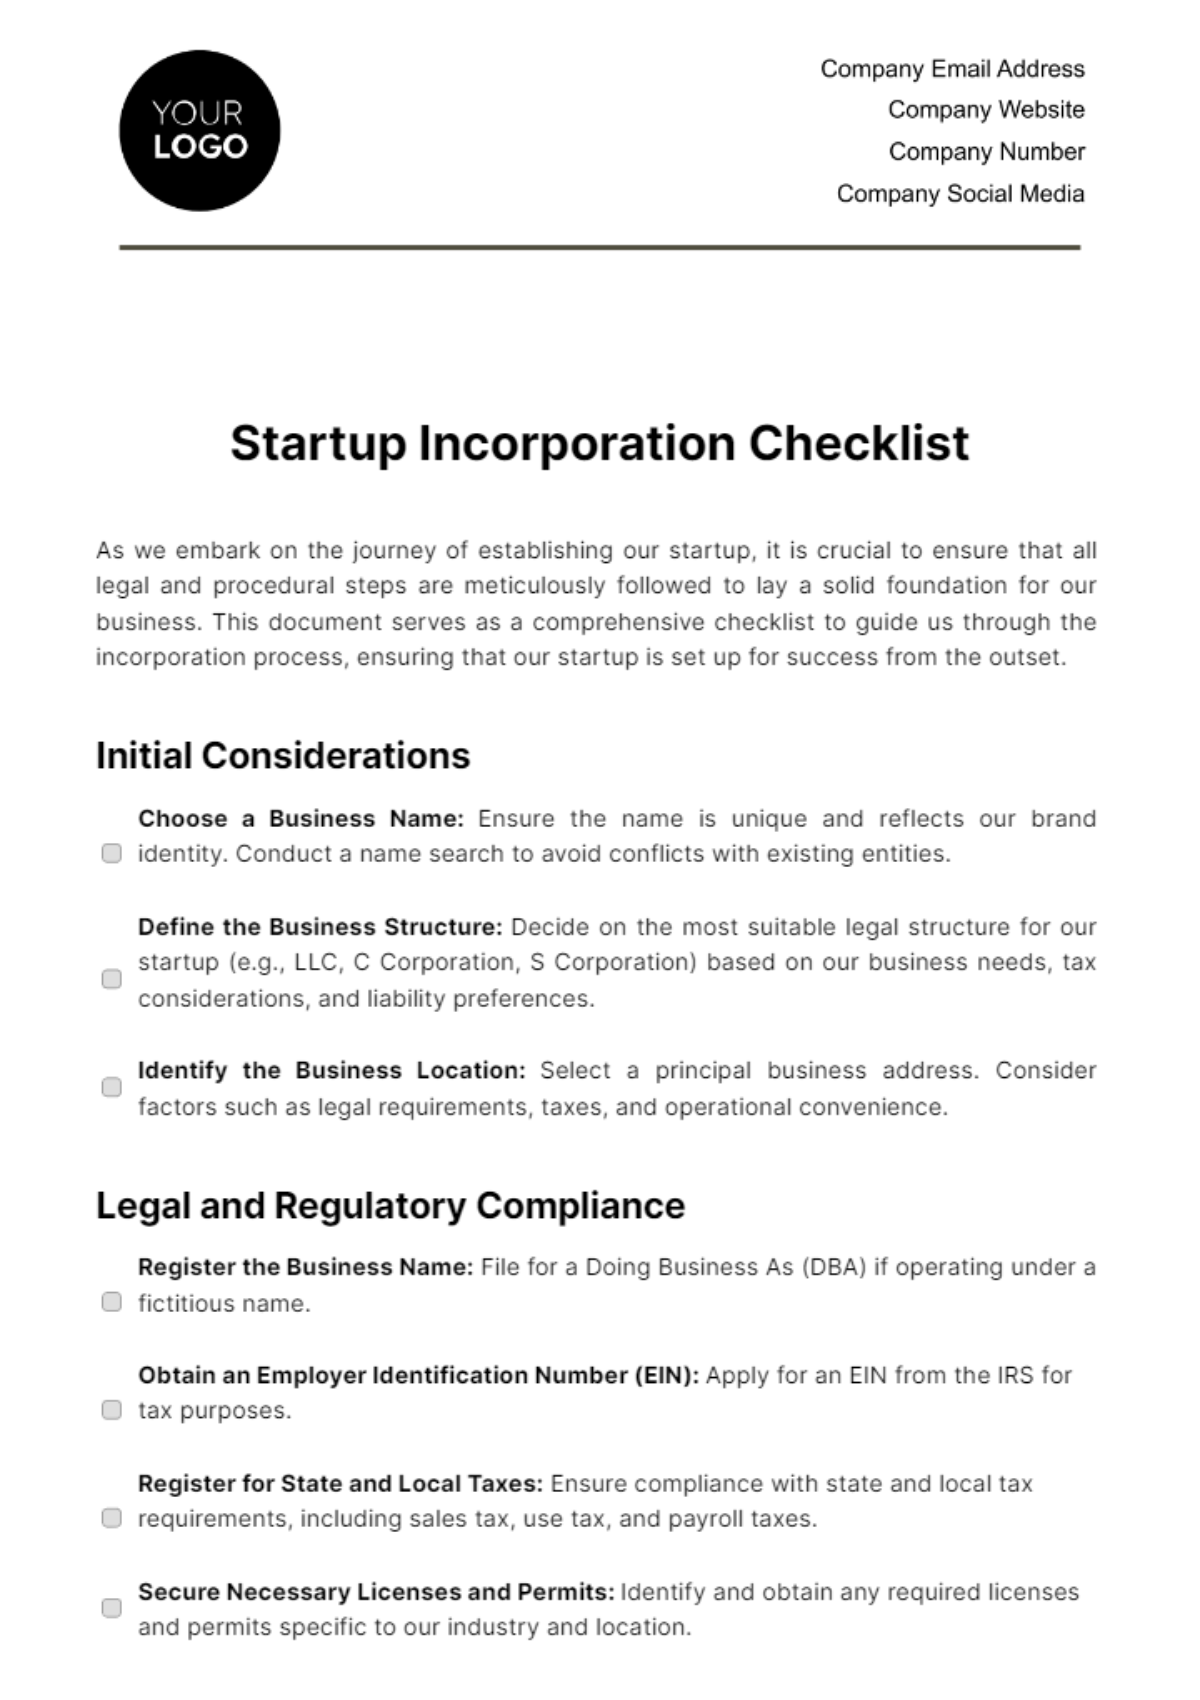 Startup Incorporation Checklist Template